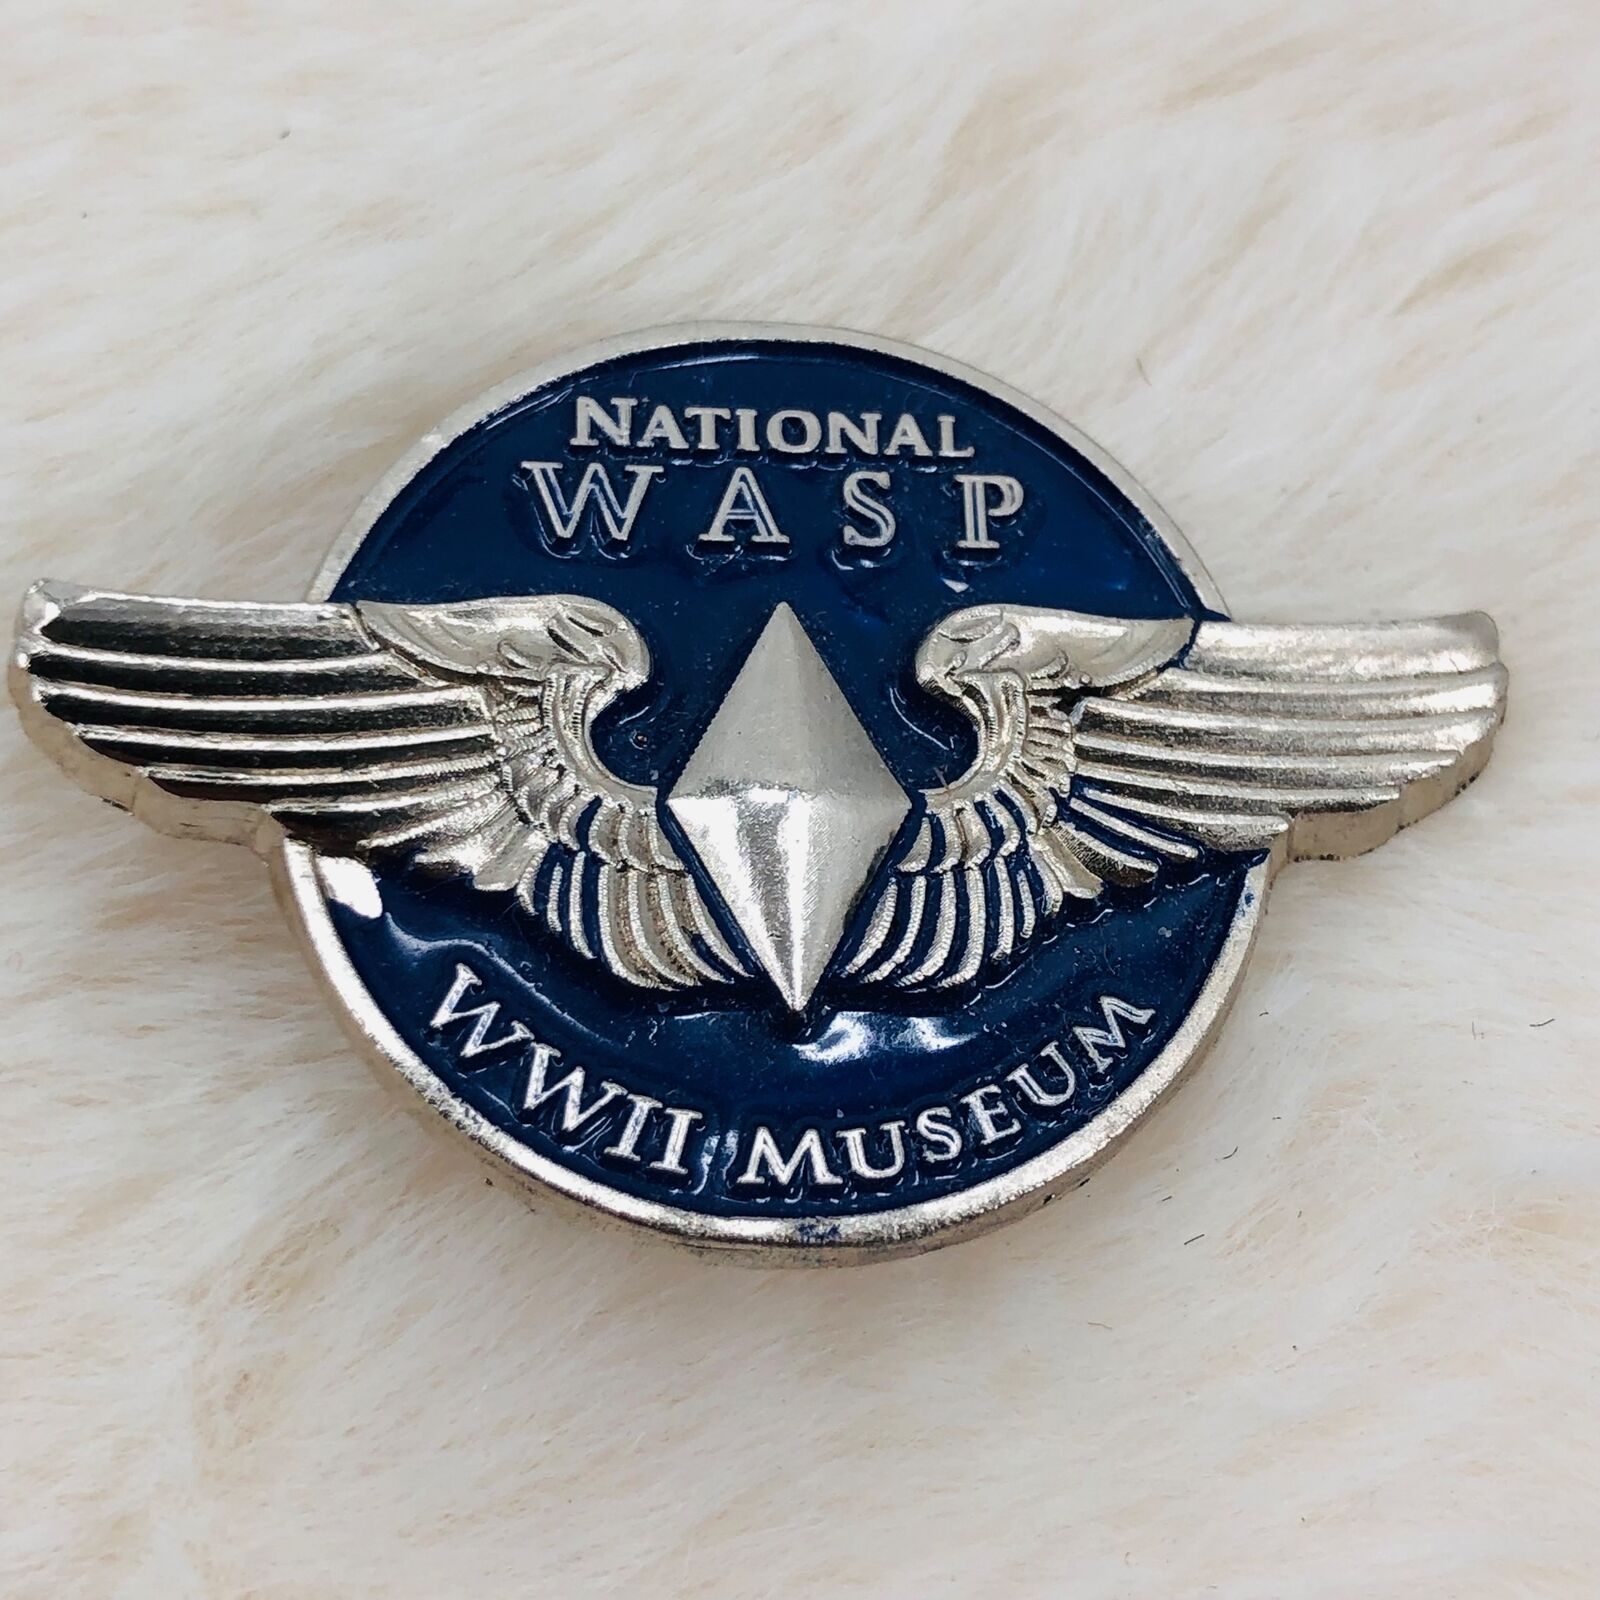 National WASP WWII Museum Souvenir Enamel Lapel Pin w/ Wings